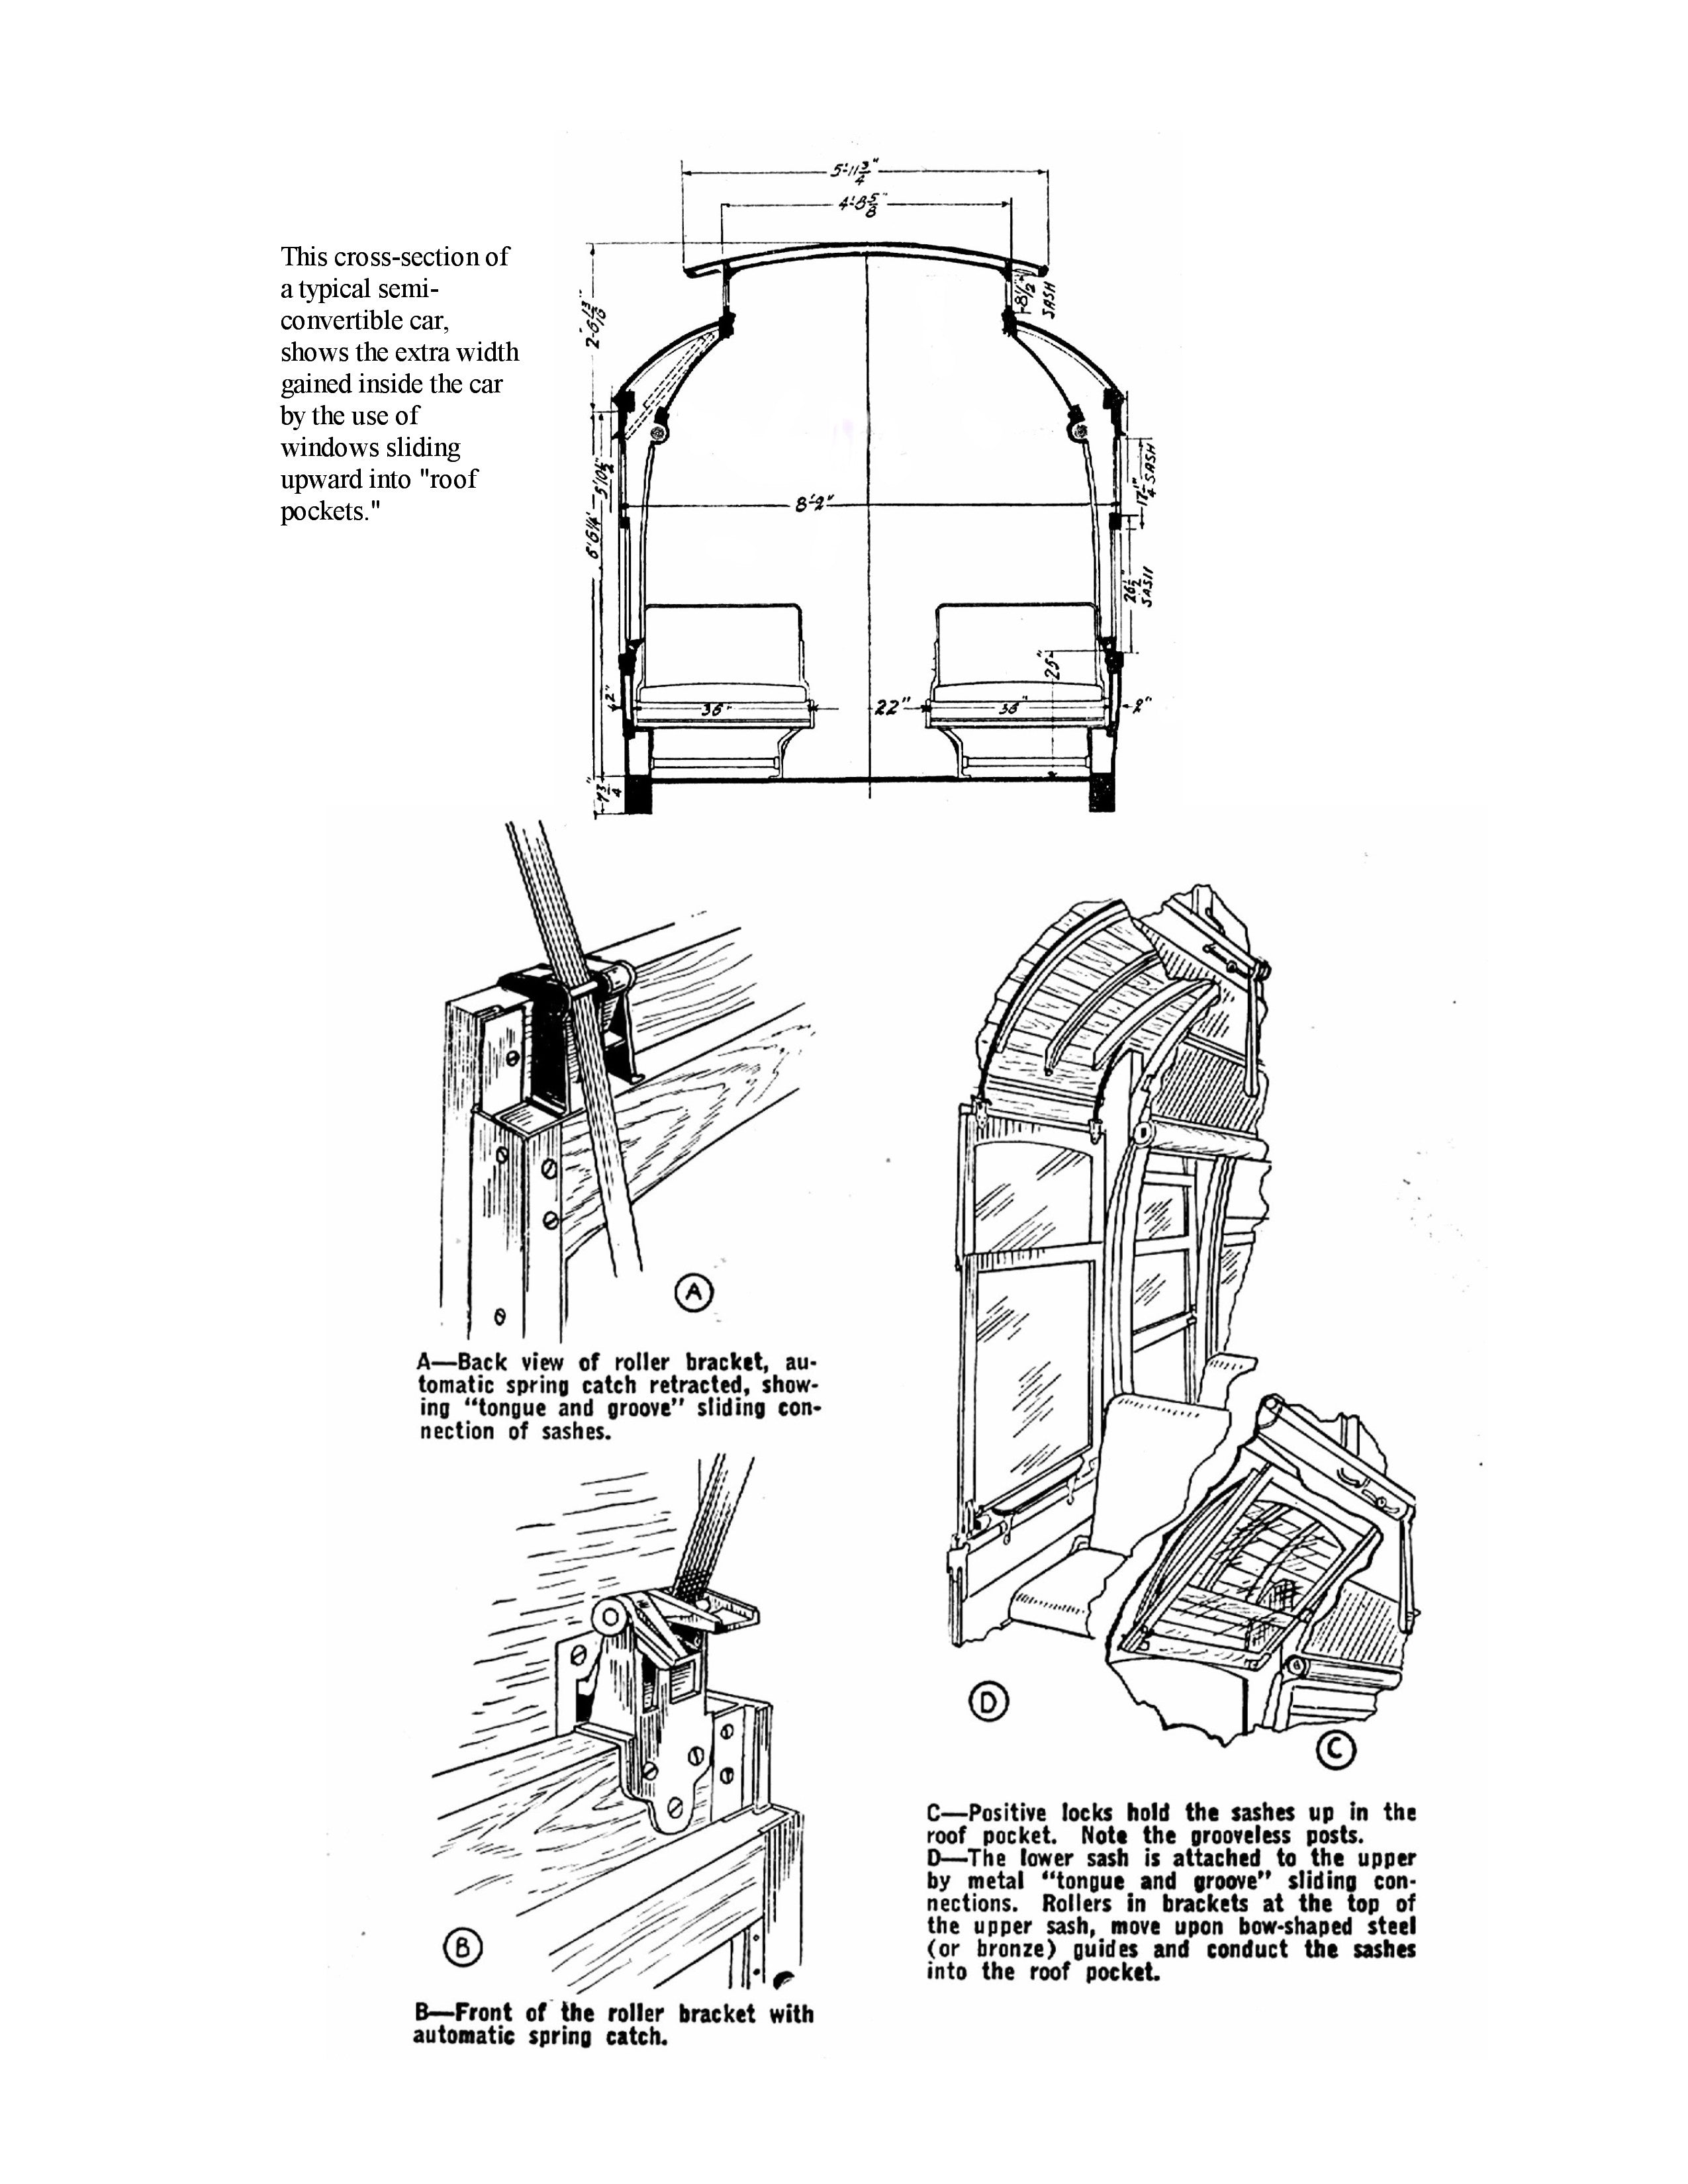 full size printed drawings semi-convertible trolleys  j.c.brill co.  a 1943 plan